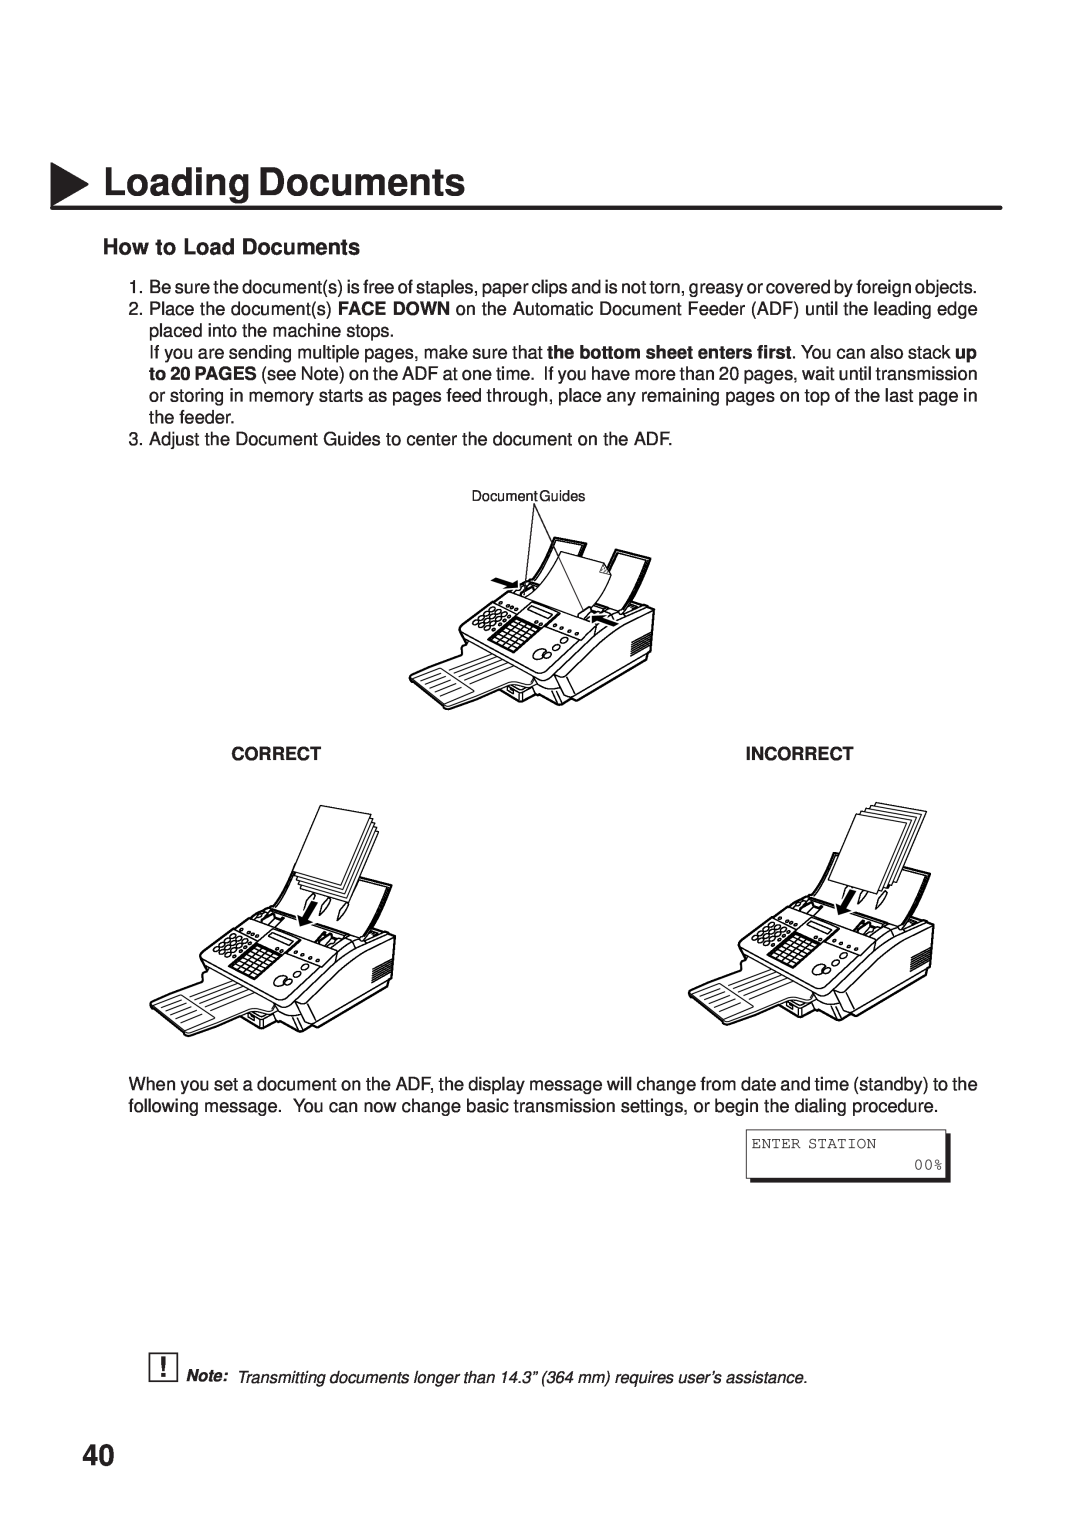 Panasonic UF-333 manual How to Load Documents, Loading Documents, Correct, Incorrect 